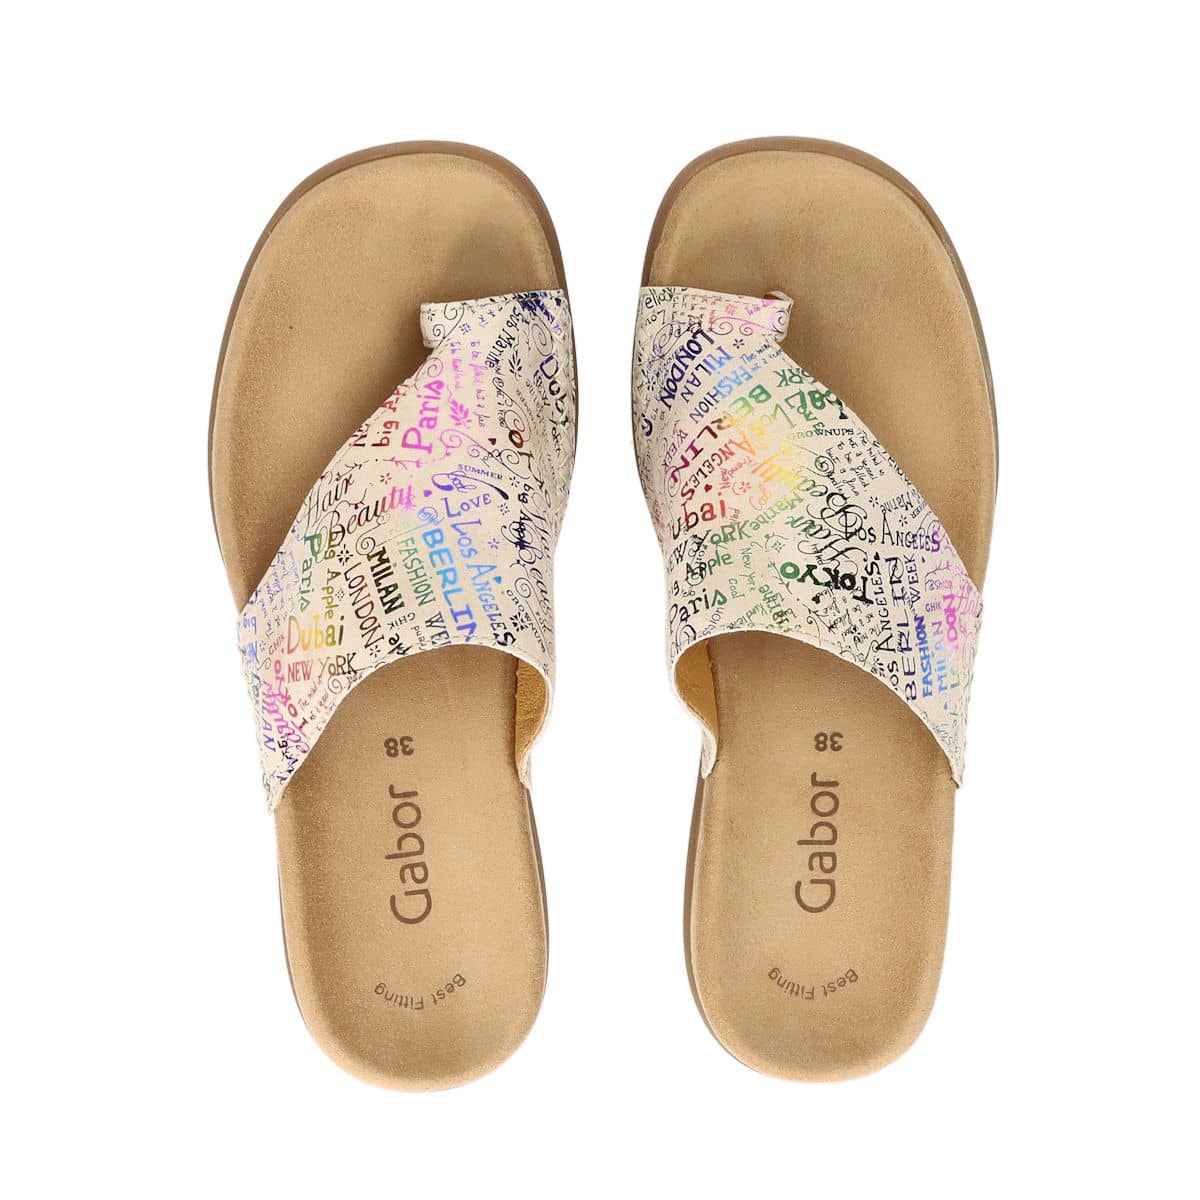 accessoires munt regio Gabor women's leather slippers - beige | Robel.shoes